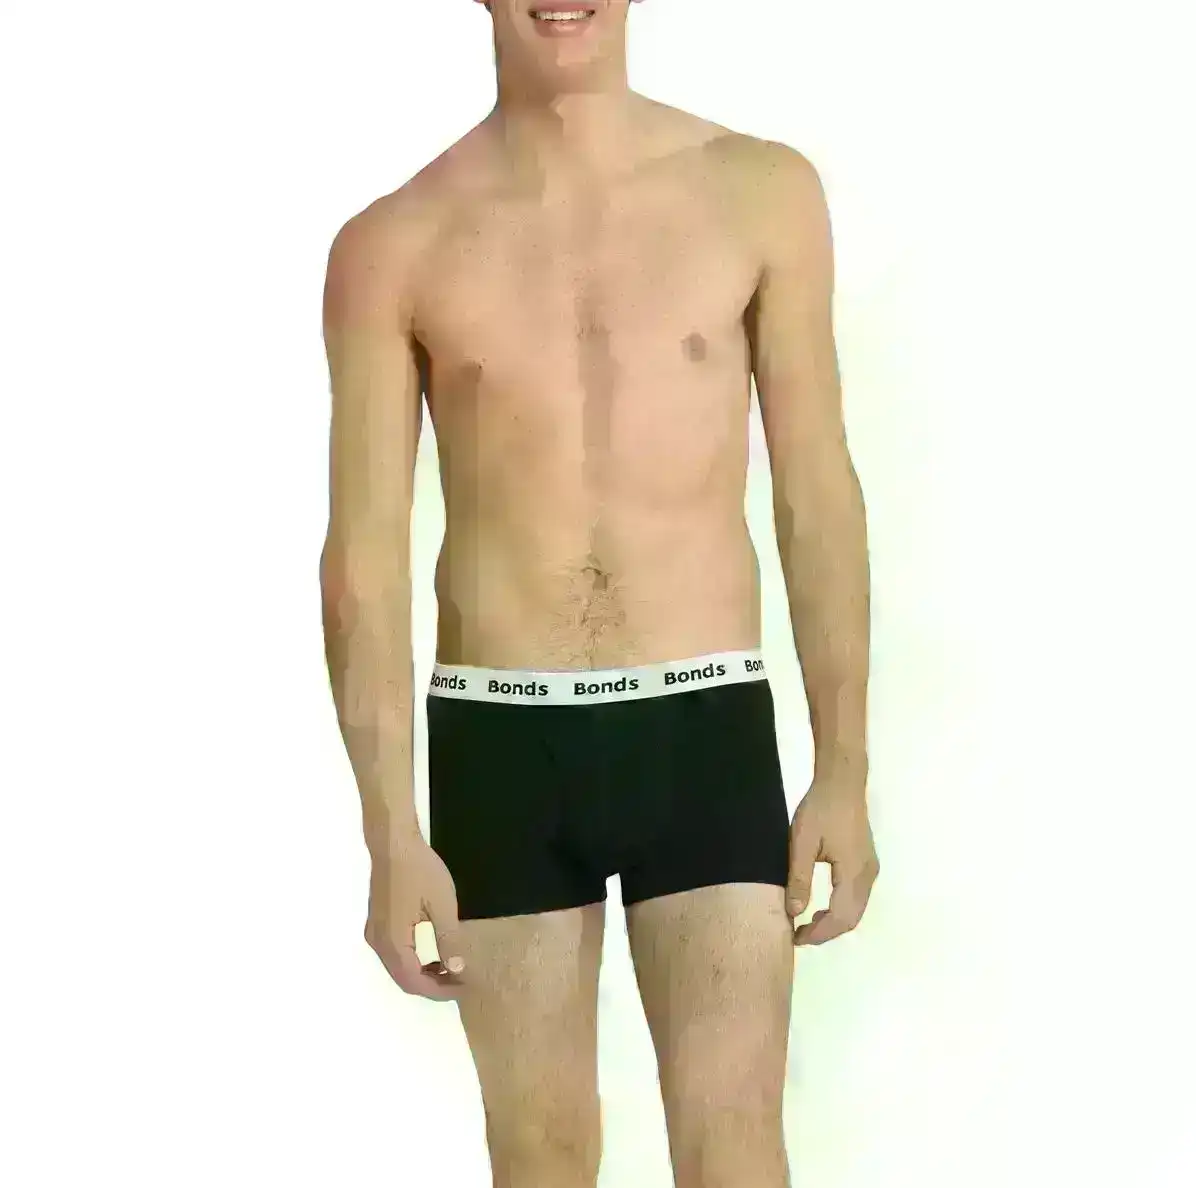 20 X Bonds Everyday Trunks Mens Underwear Assorted Shorts Briefs Jocks, Australian Fashion Boutique